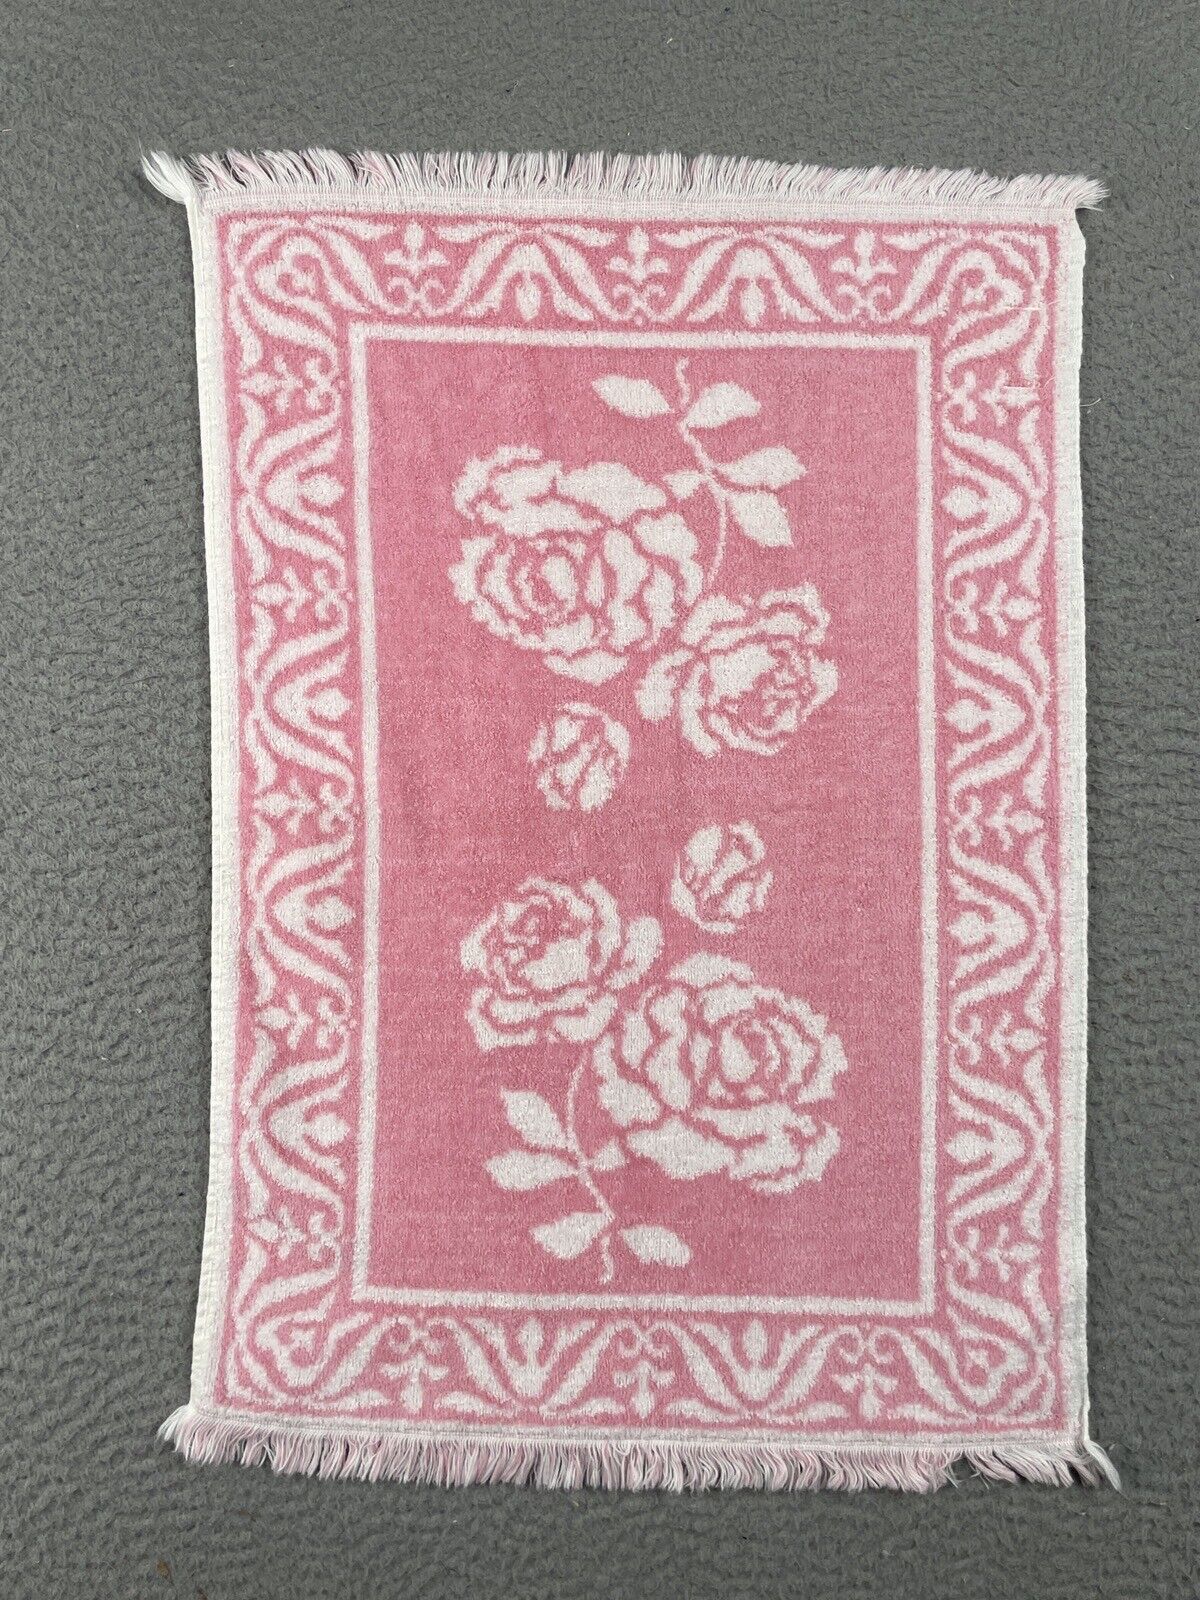 Vintage Hand Towel Montgomery Ward Style House Pink White Flower Fringe MCM Rose